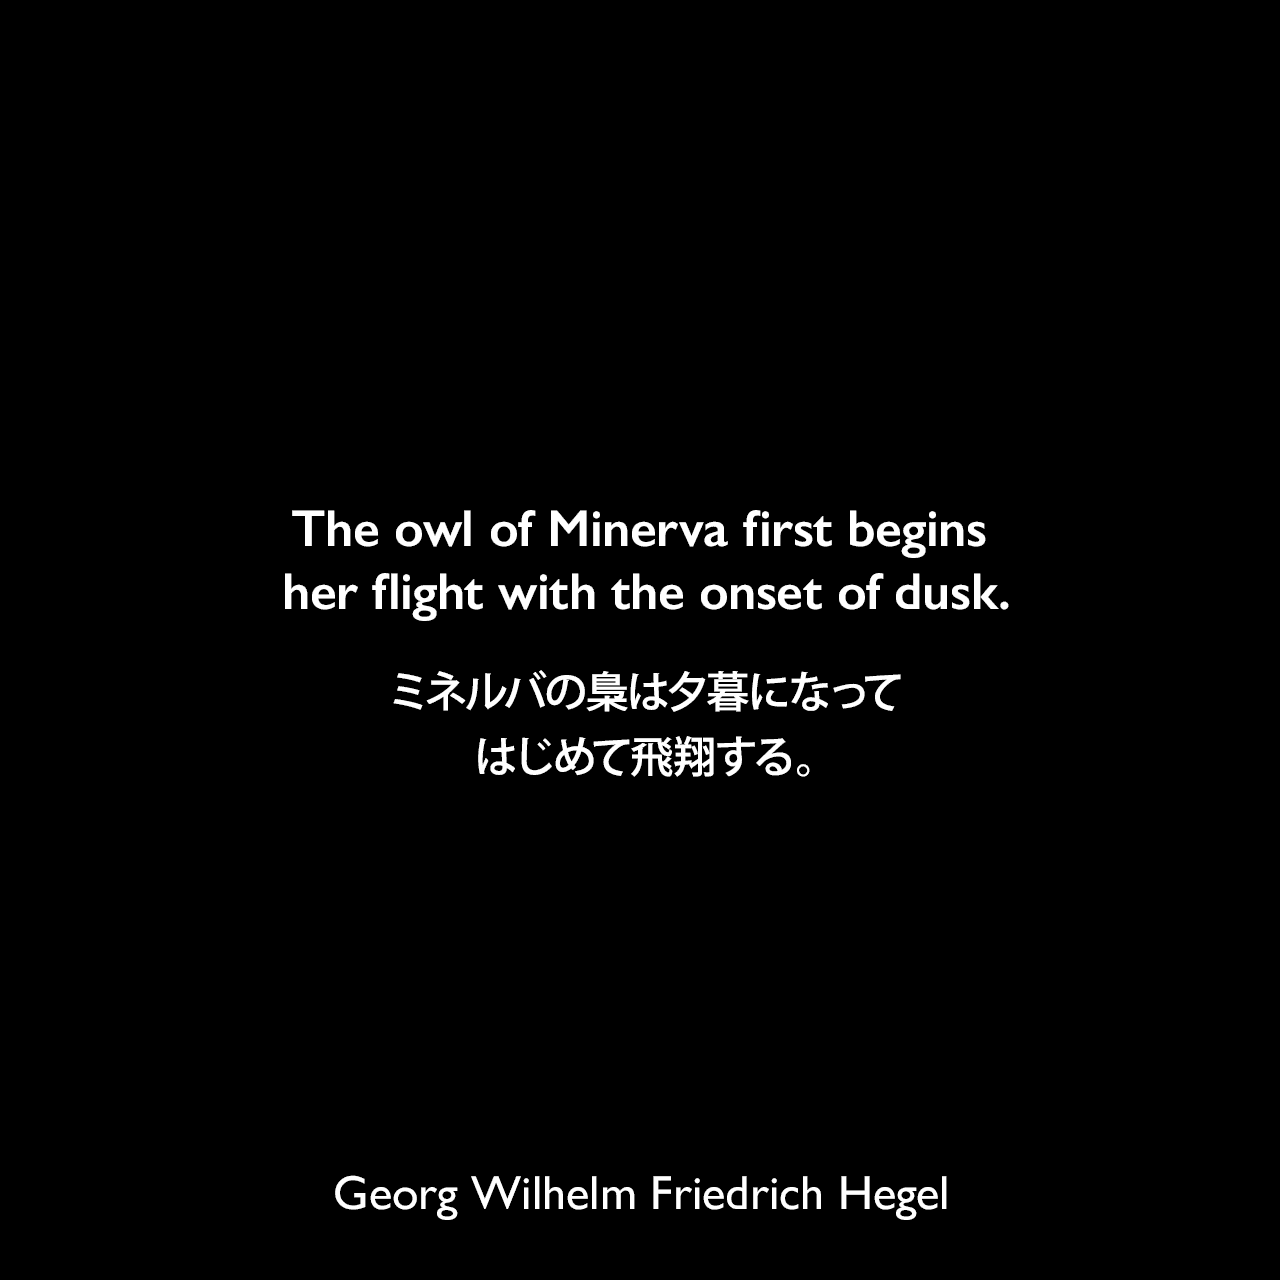 The owl of Minerva first begins her flight with the onset of dusk.ミネルバの梟は夕暮になってはじめて飛翔する。- ヘーゲルによる本「法の哲学」よりGeorg Wilhelm Friedrich Hegel